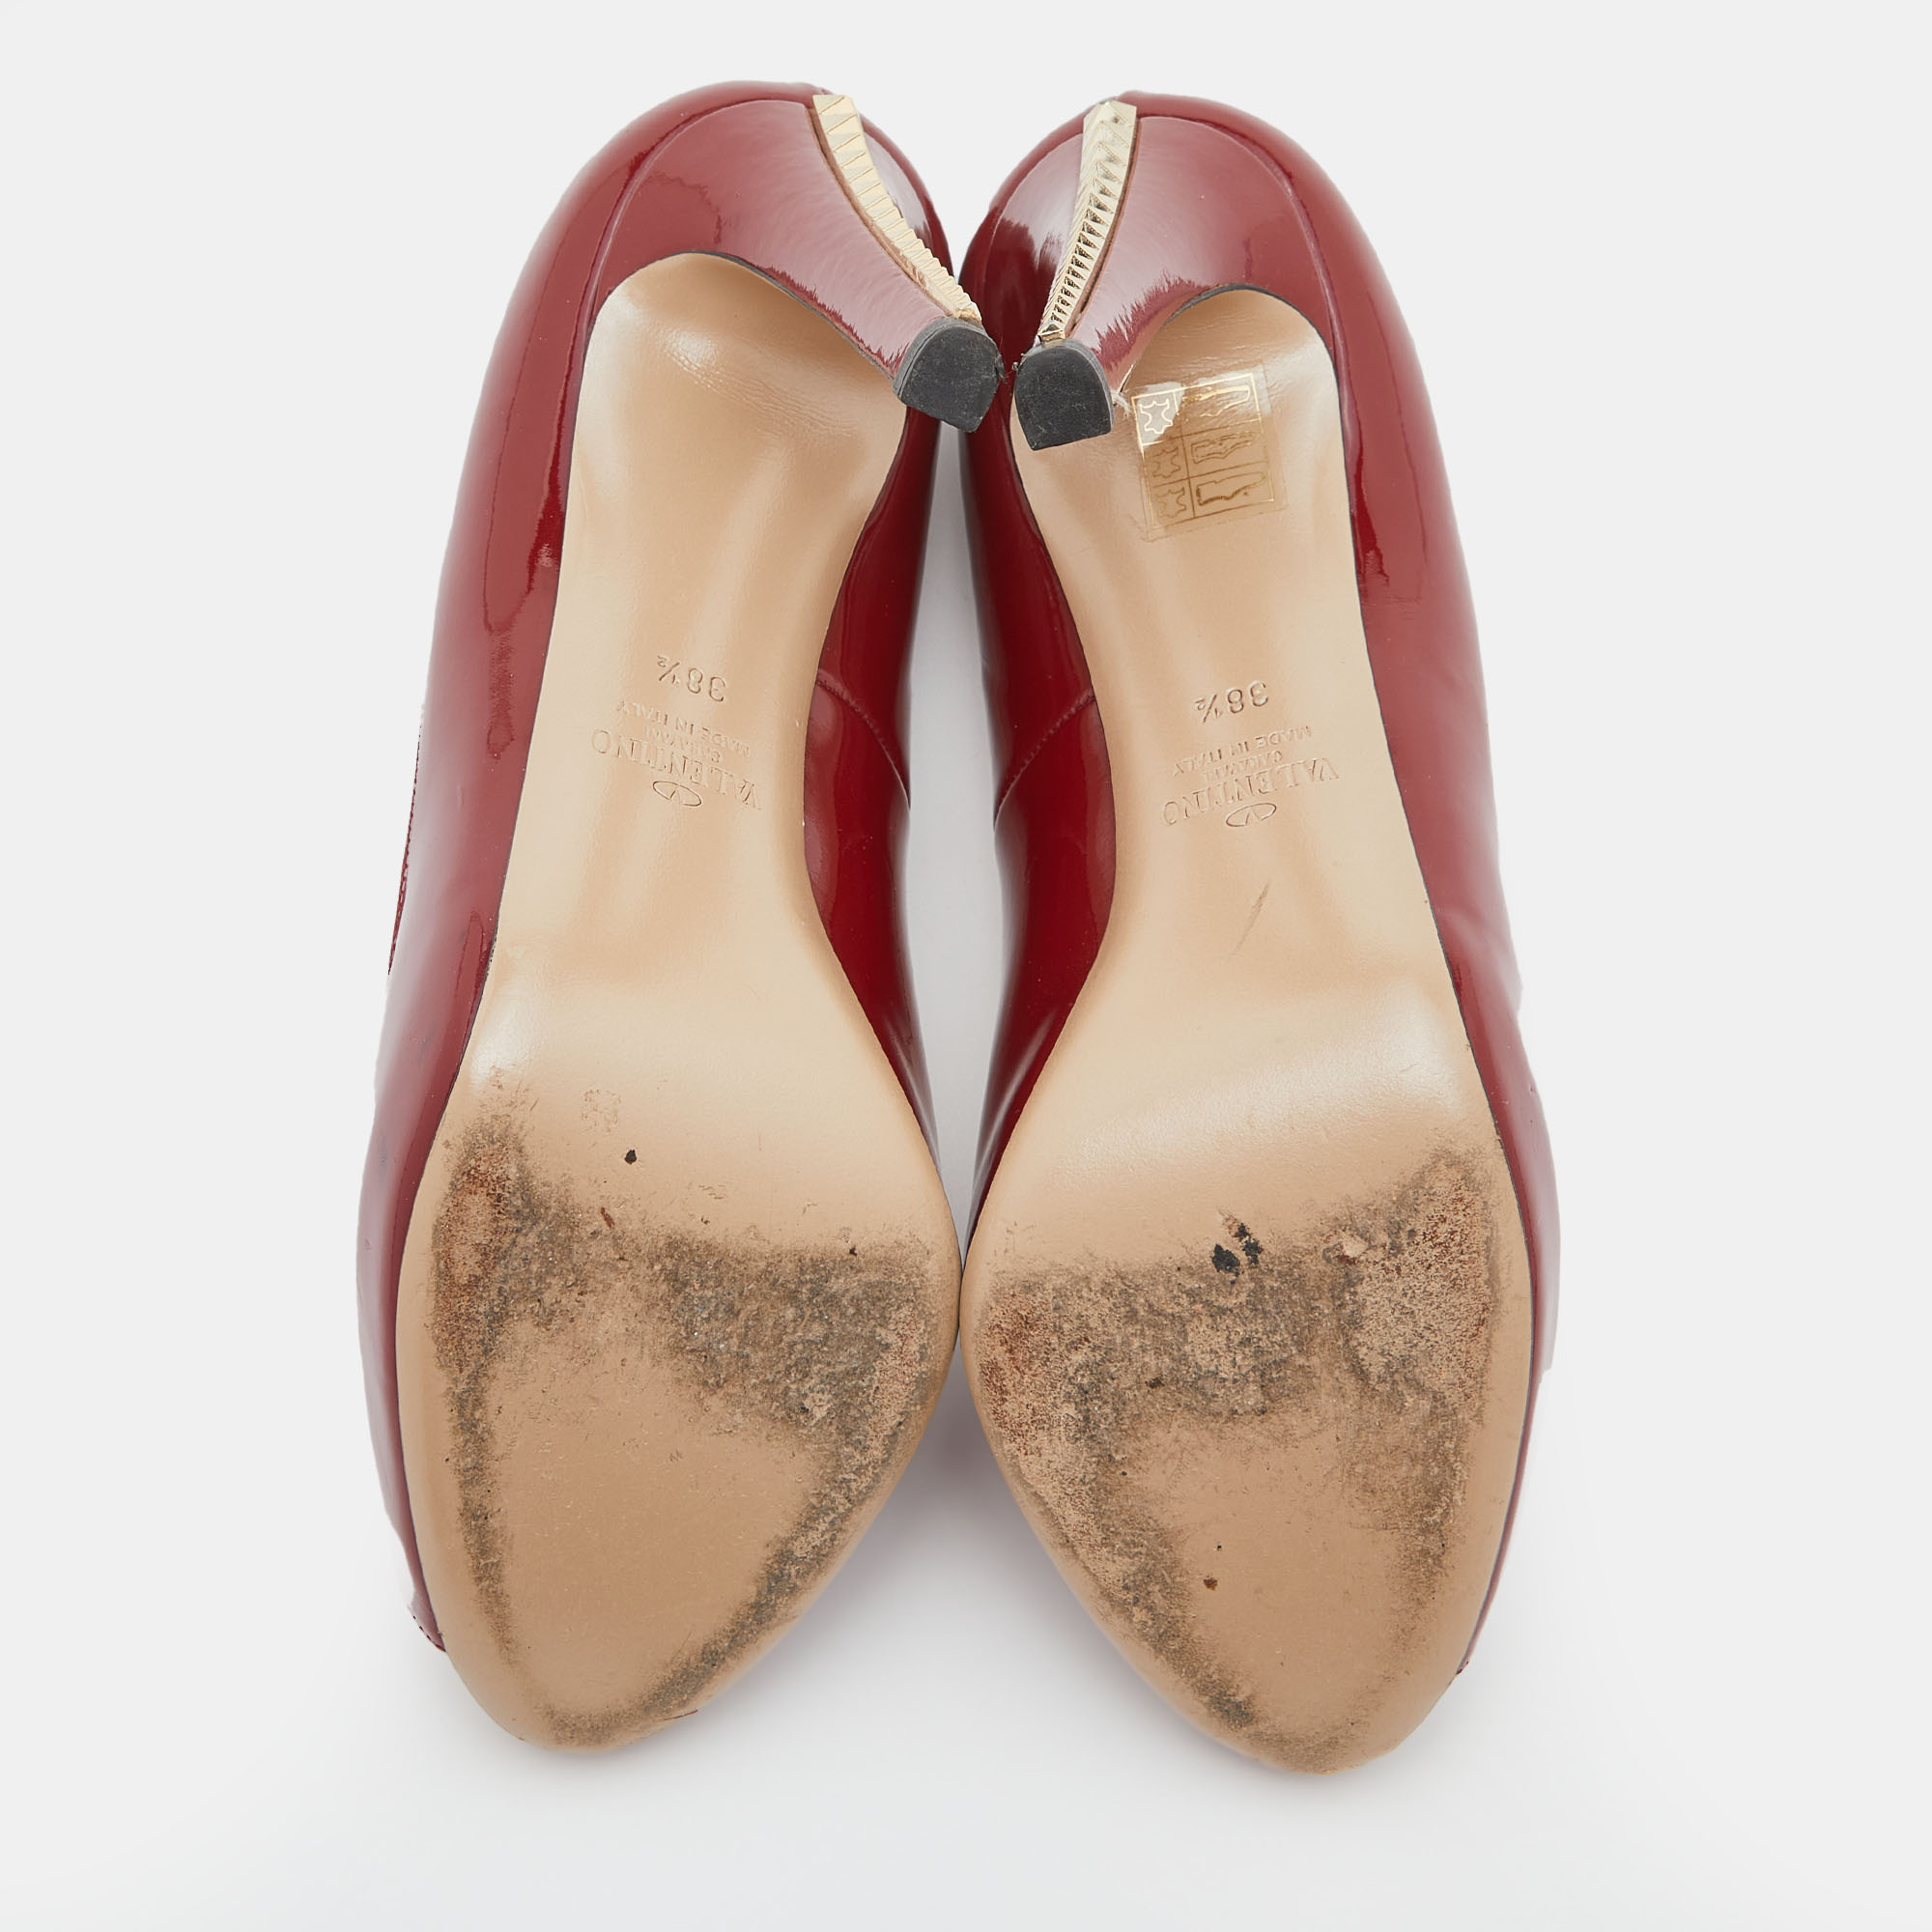 Valentino Red Patent Leather Rockstud Heel Peep Toe Pumps Size 38.5